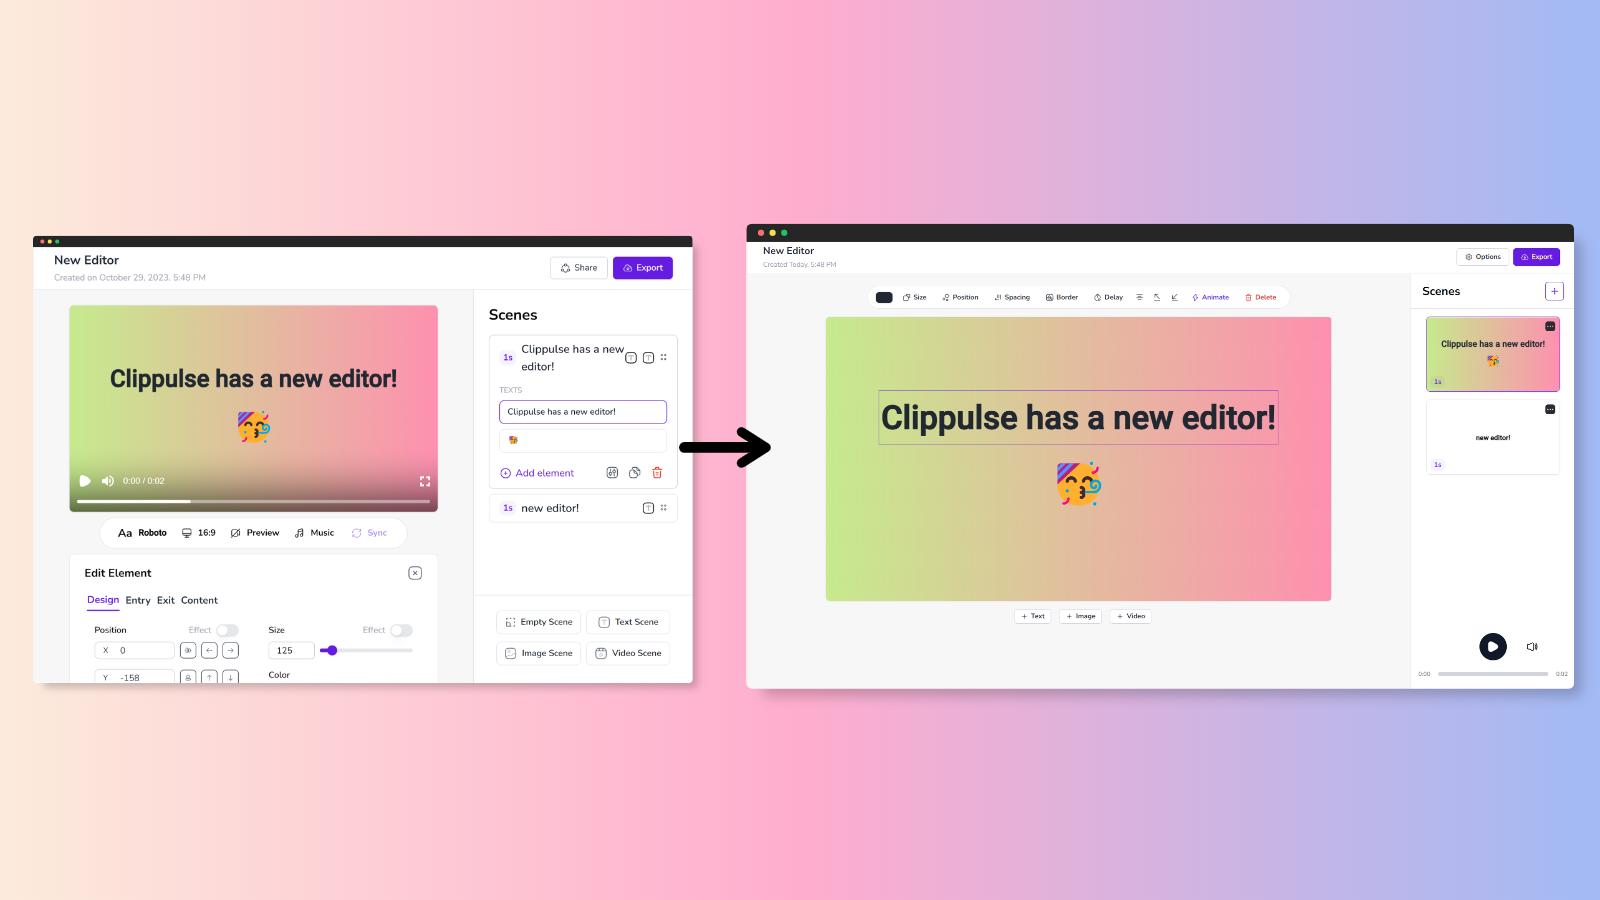 Meet the New Clippulse Editor